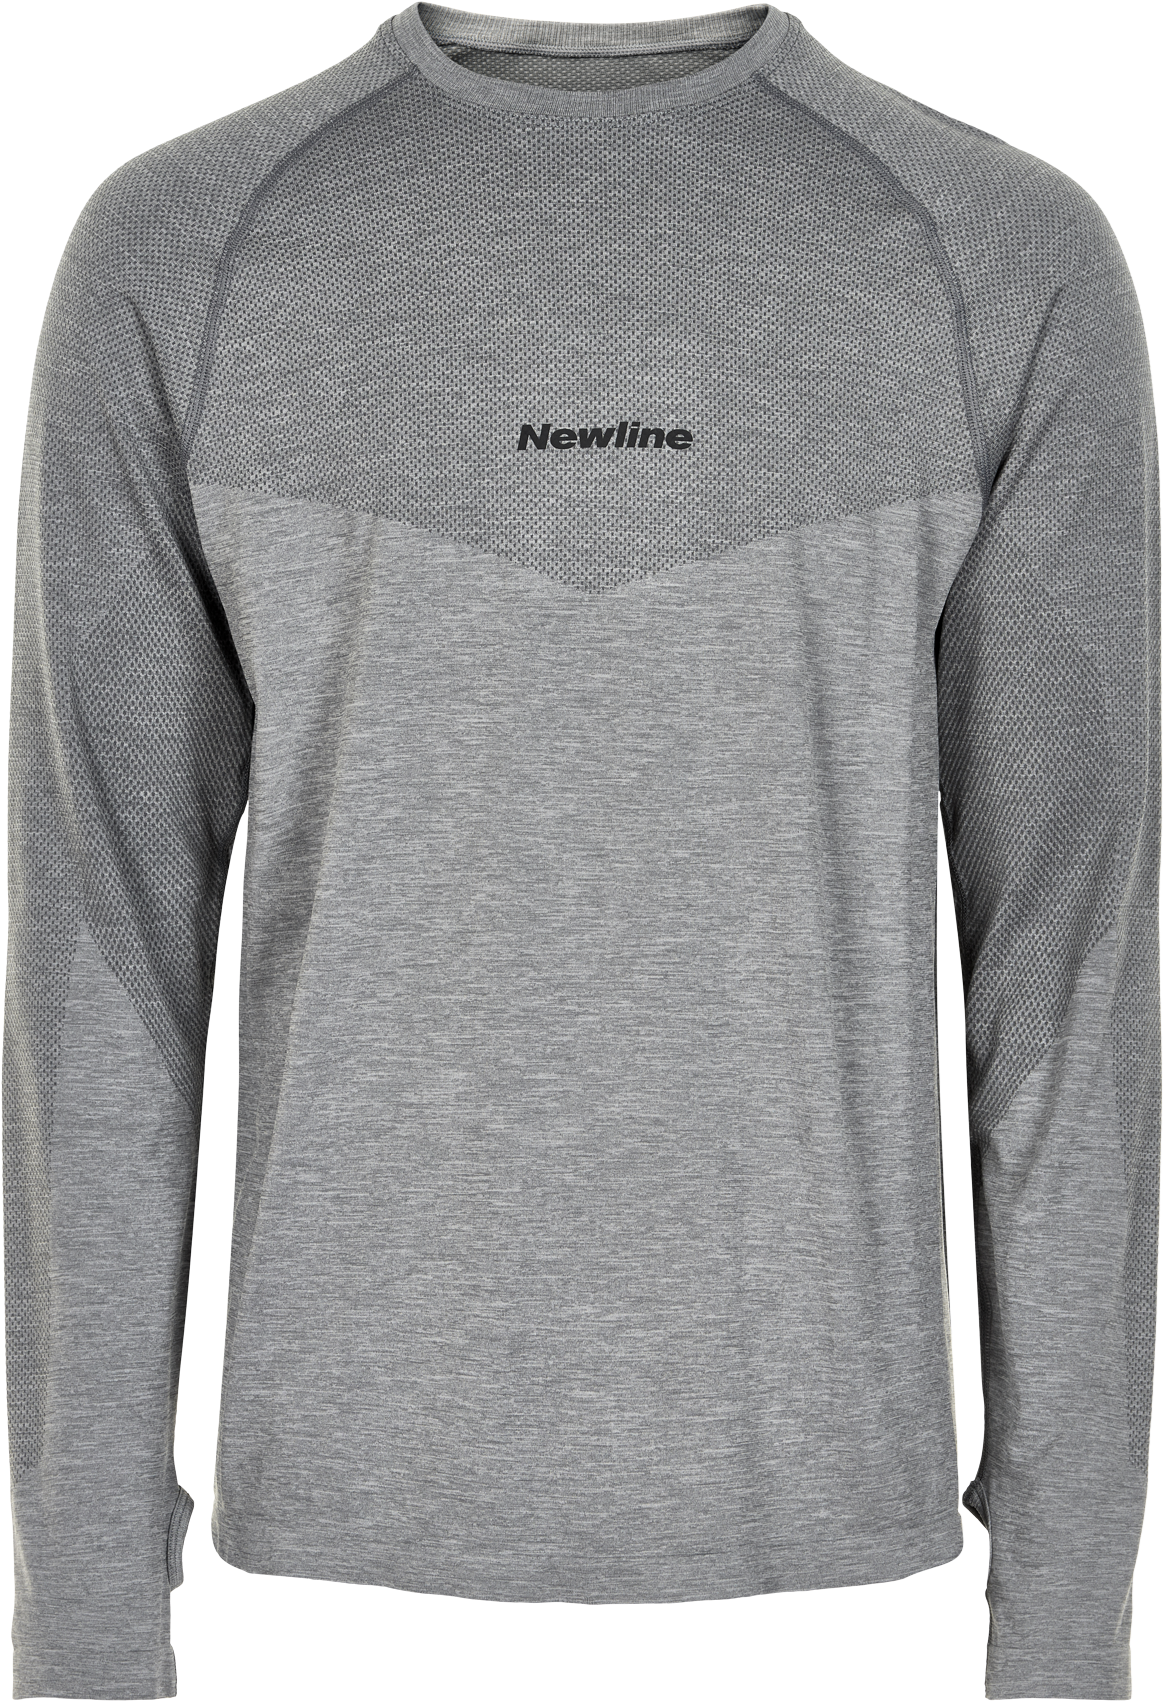 Gray Newline Long Sleeve Running Shirt PNG image